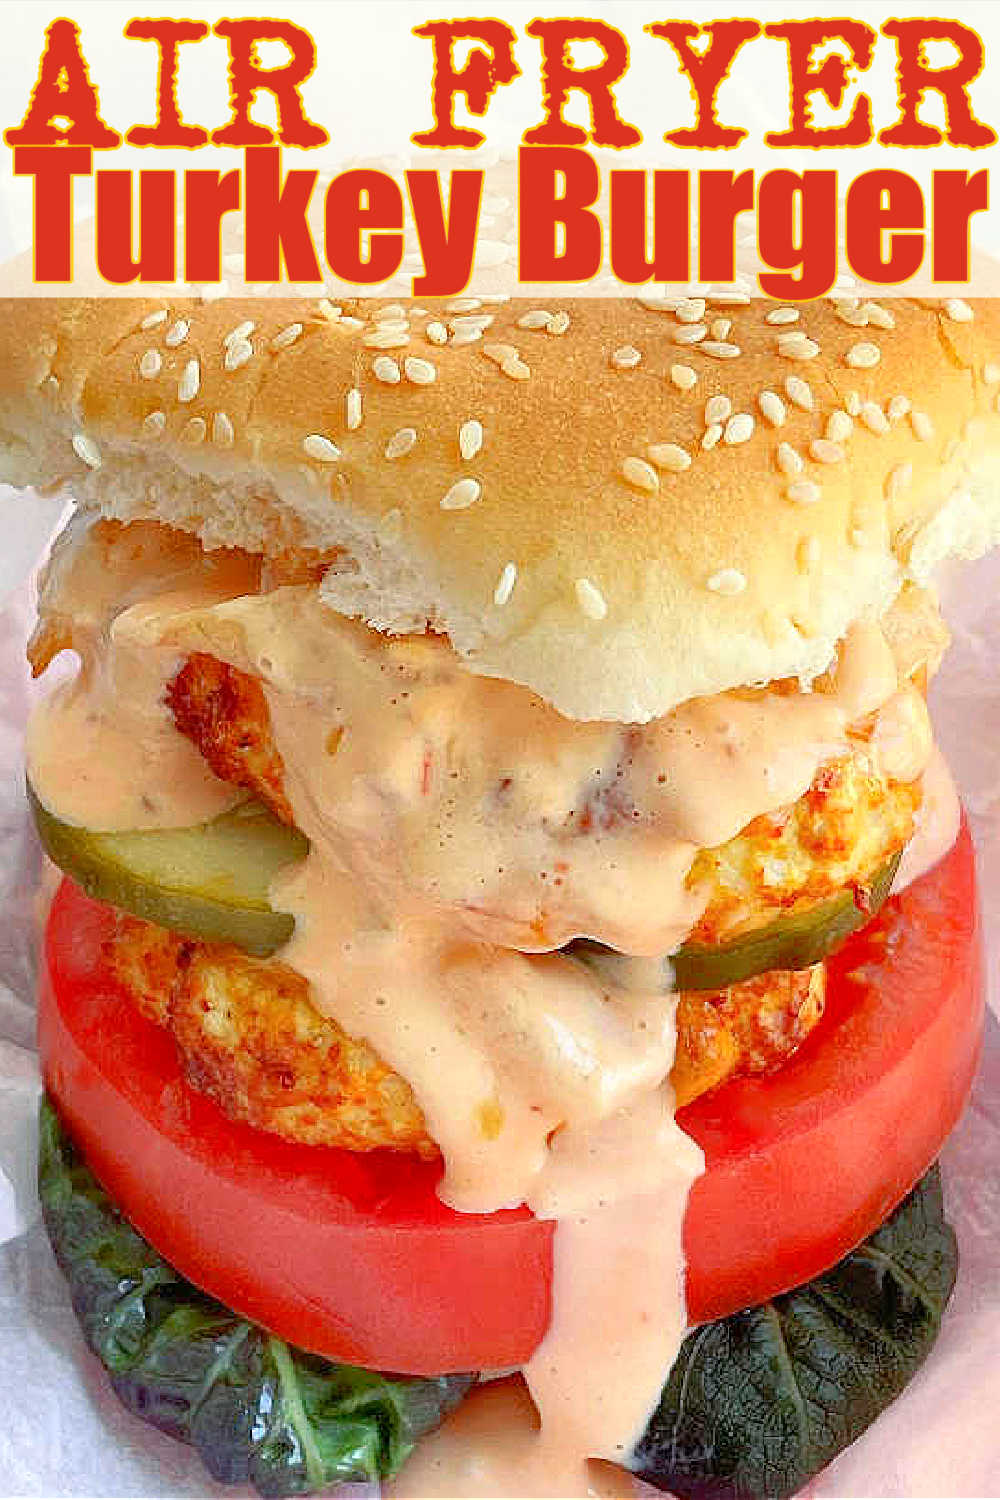 Air Fryer Turkey Burgers | Foodtastic Mom #airfryerrecipes #turkeyburger #burgerrecipes #airfryerturkeyburgers via @foodtasticmom